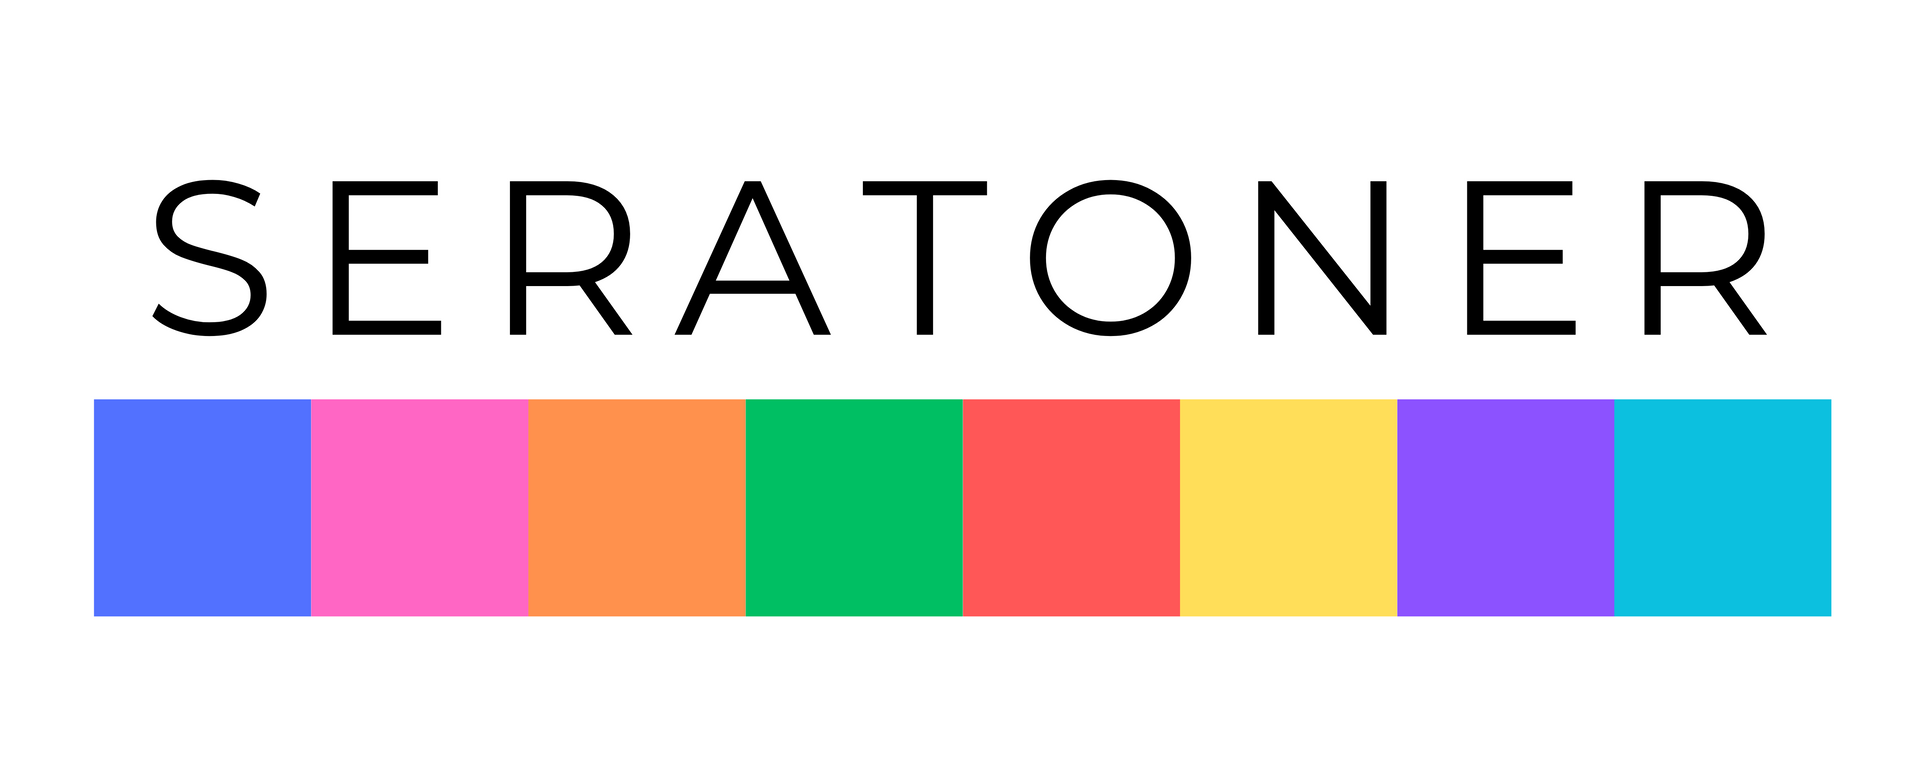 Seratoner Logo 